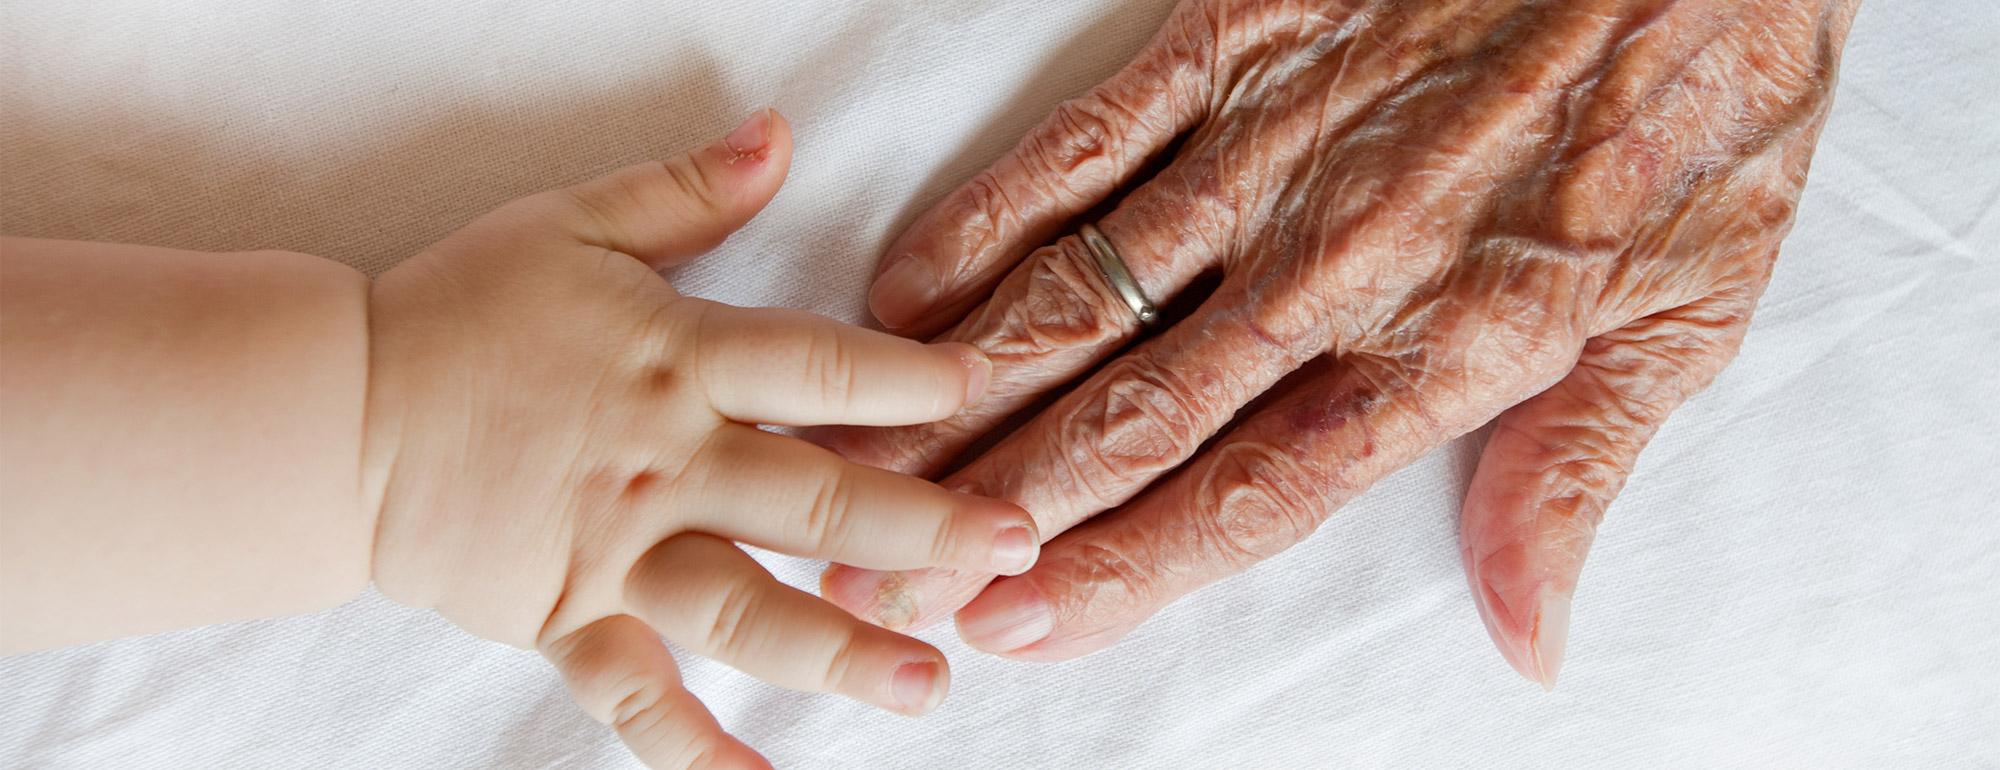 an infants hand touching an elderly persons hand